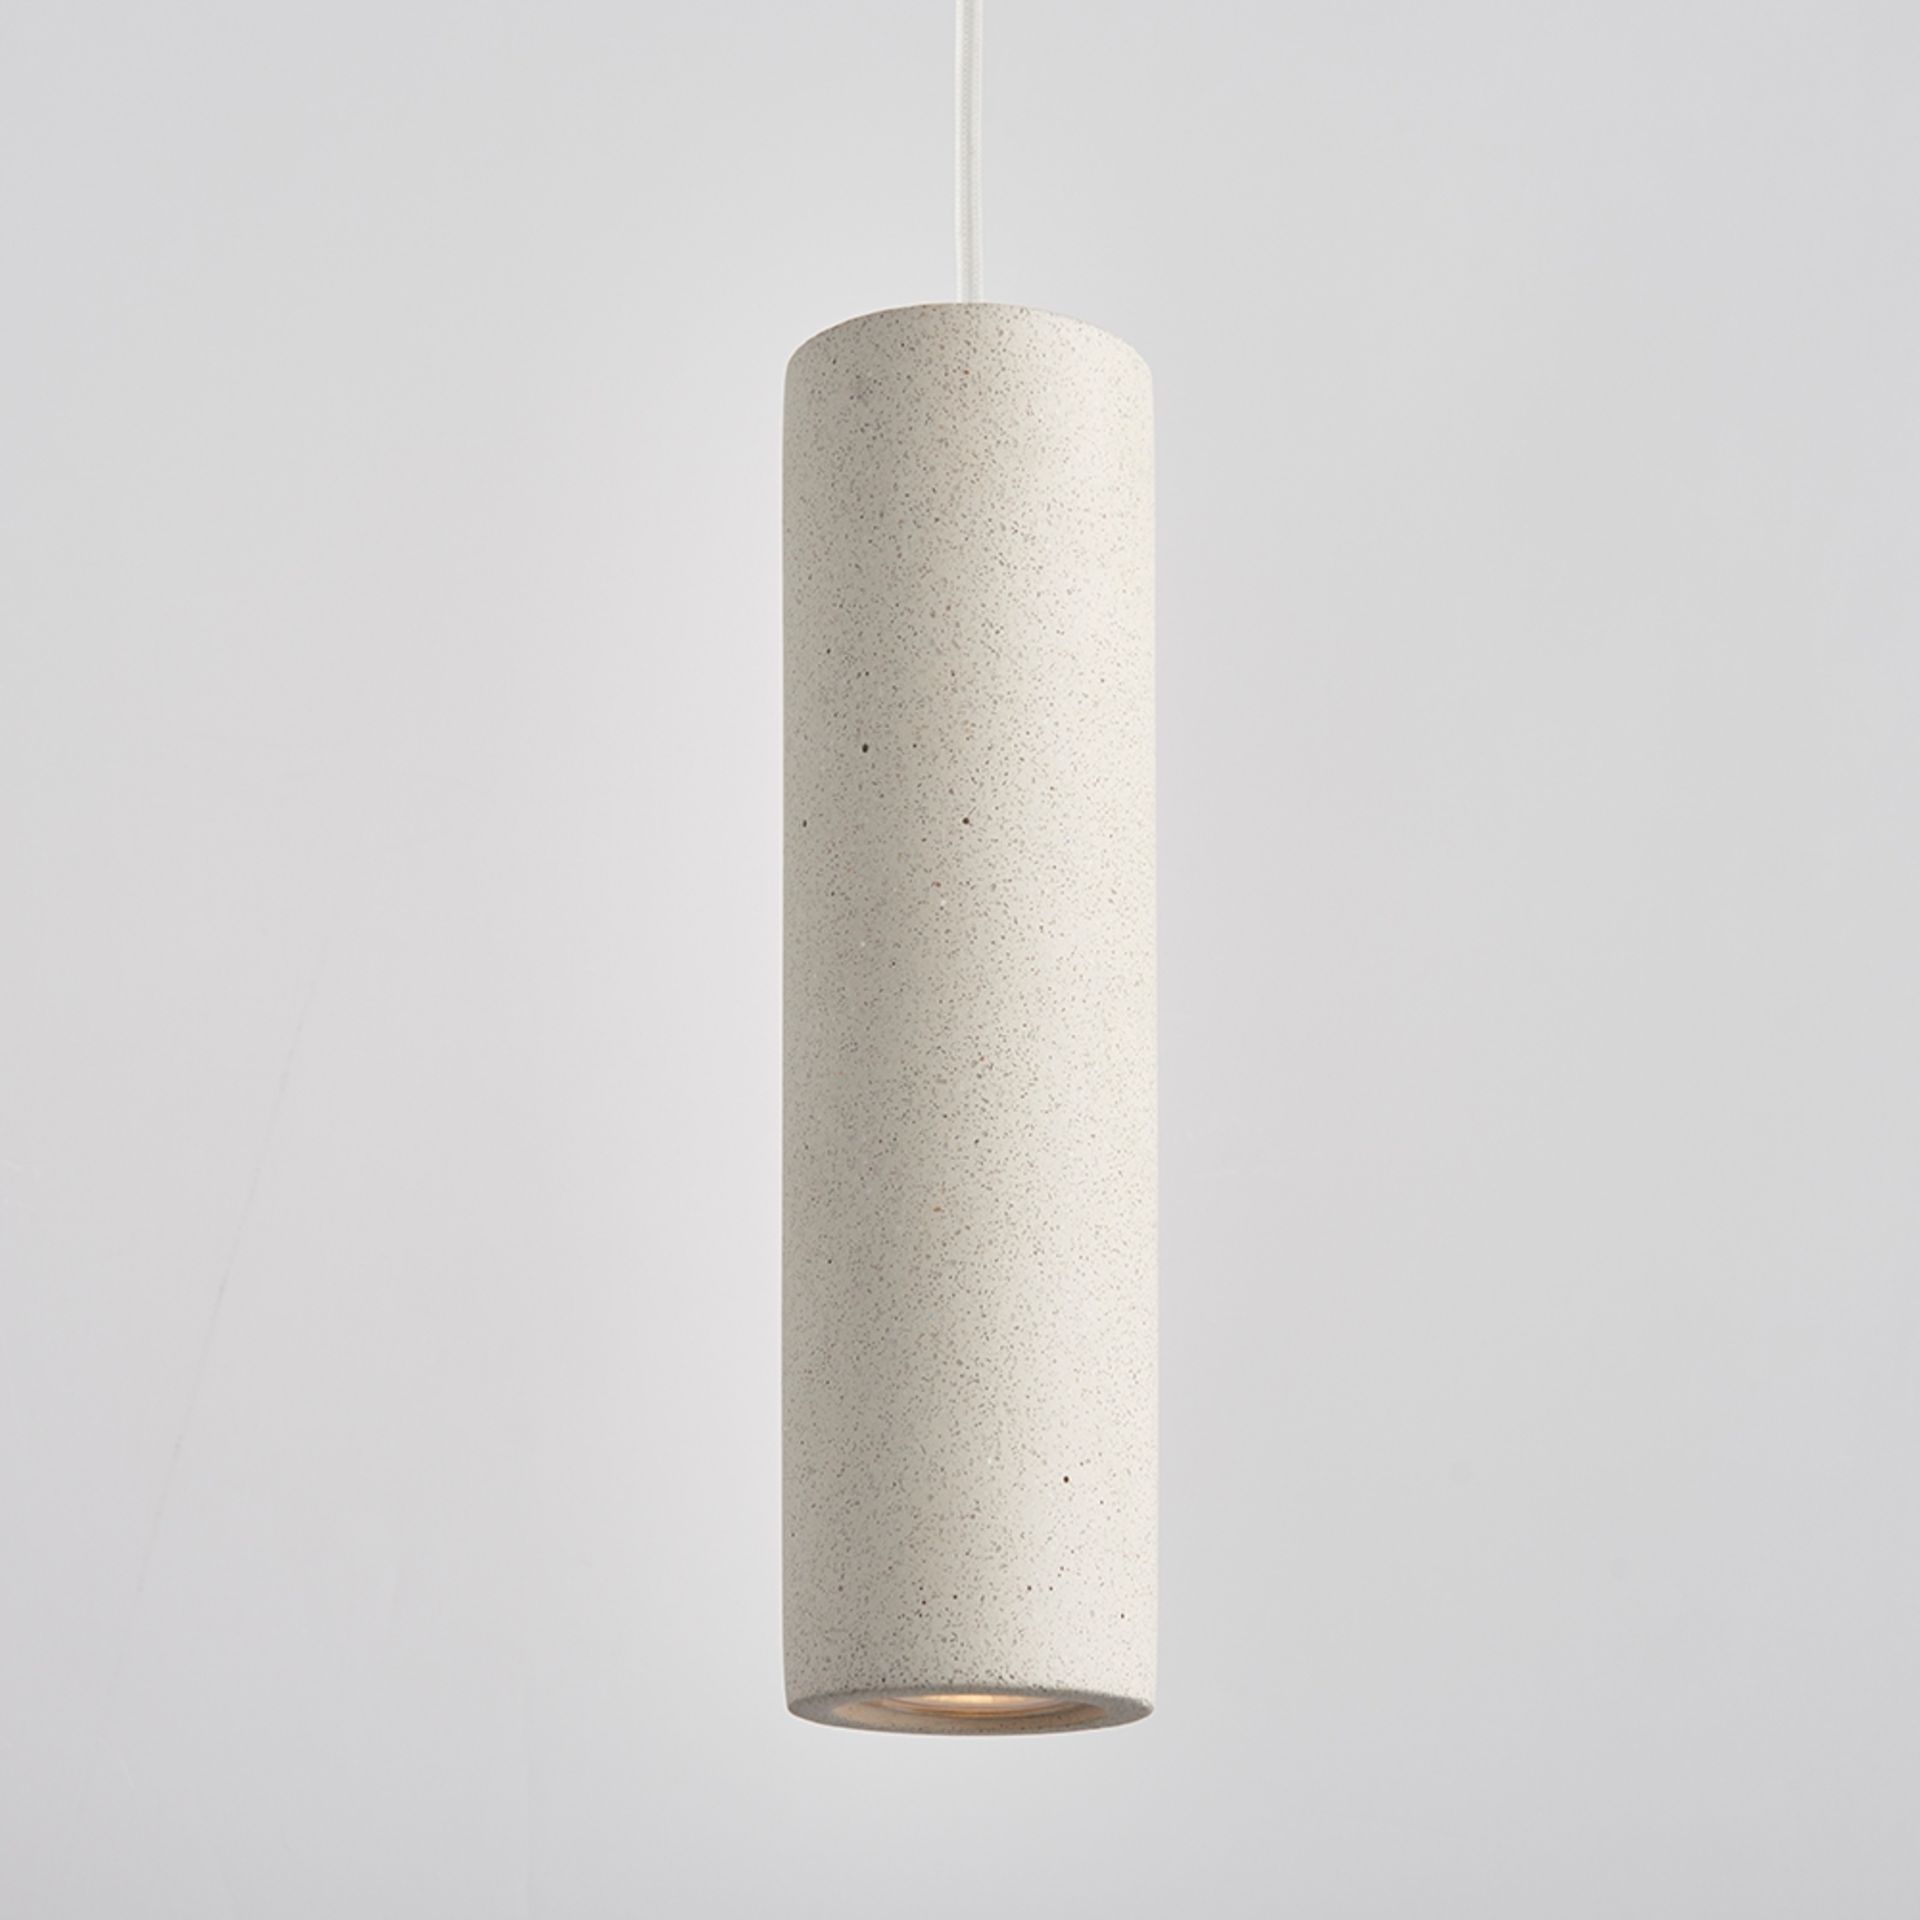 Endon Lighting Architectural inspired white sandstone concrete finish pendant, suspended from - Bild 4 aus 5